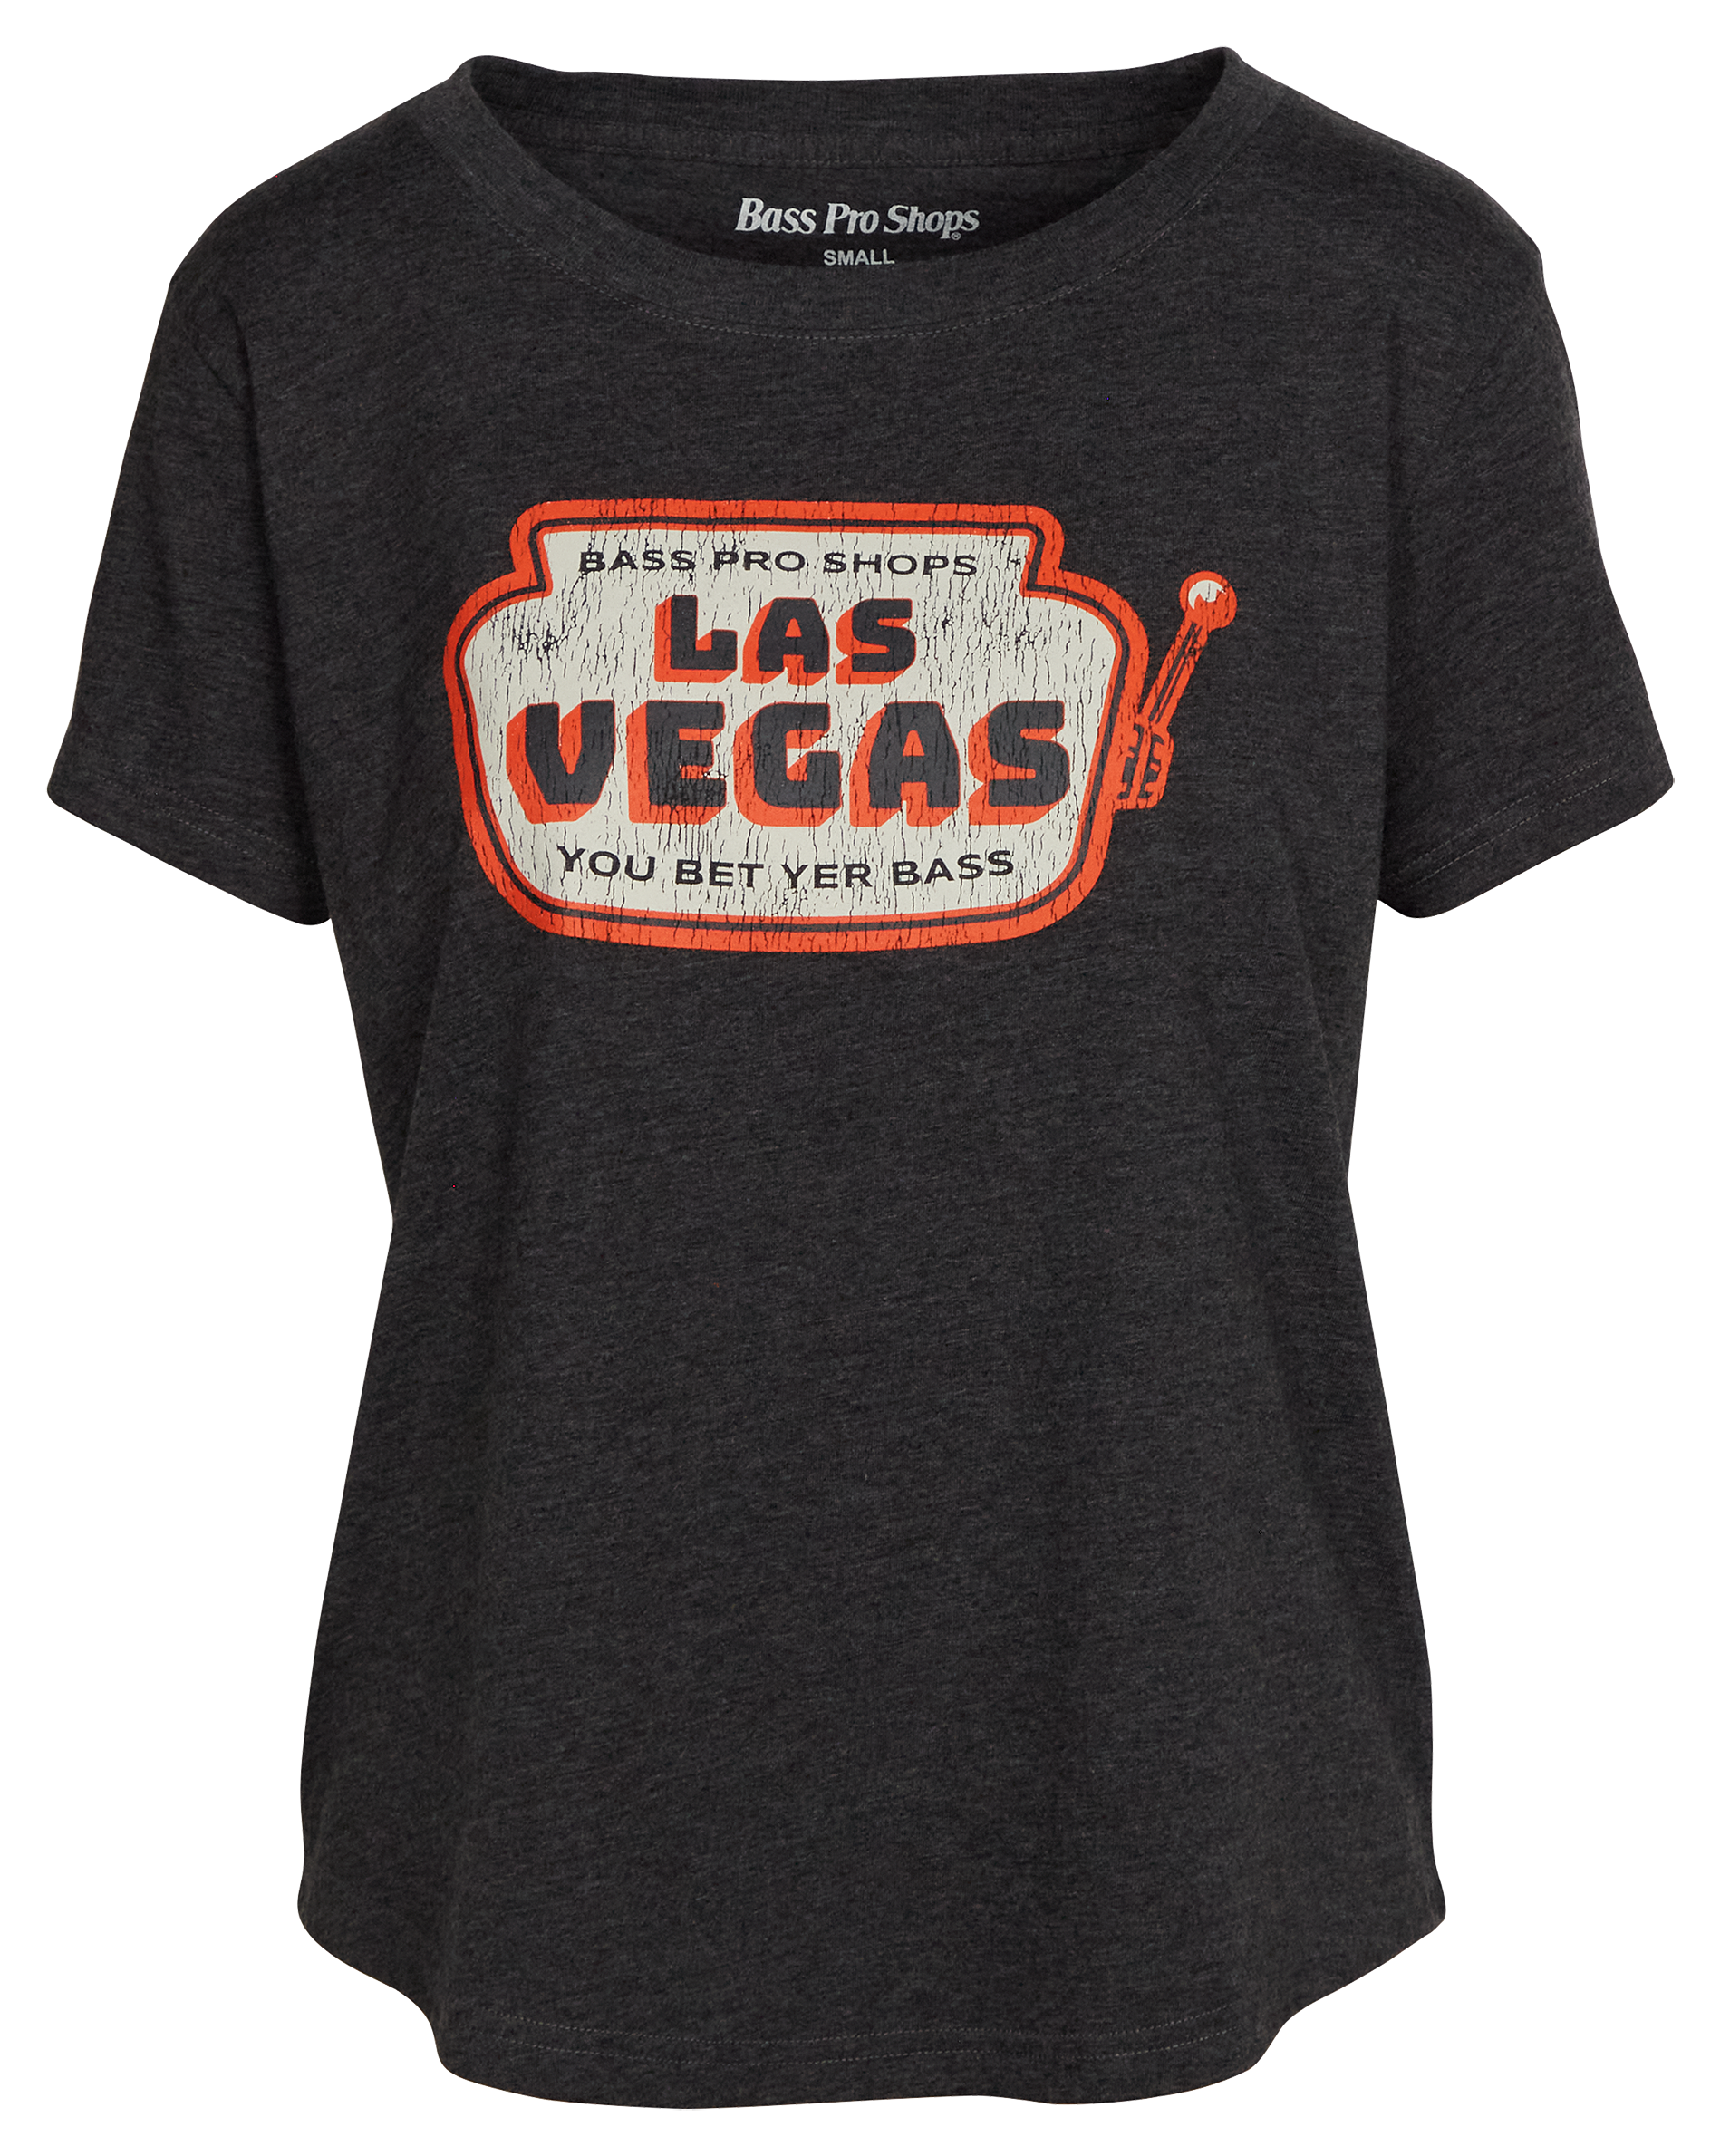 Bass Pro Shops Las Vegas Slot Machine Short-Sleeve T-Shirt for Ladies